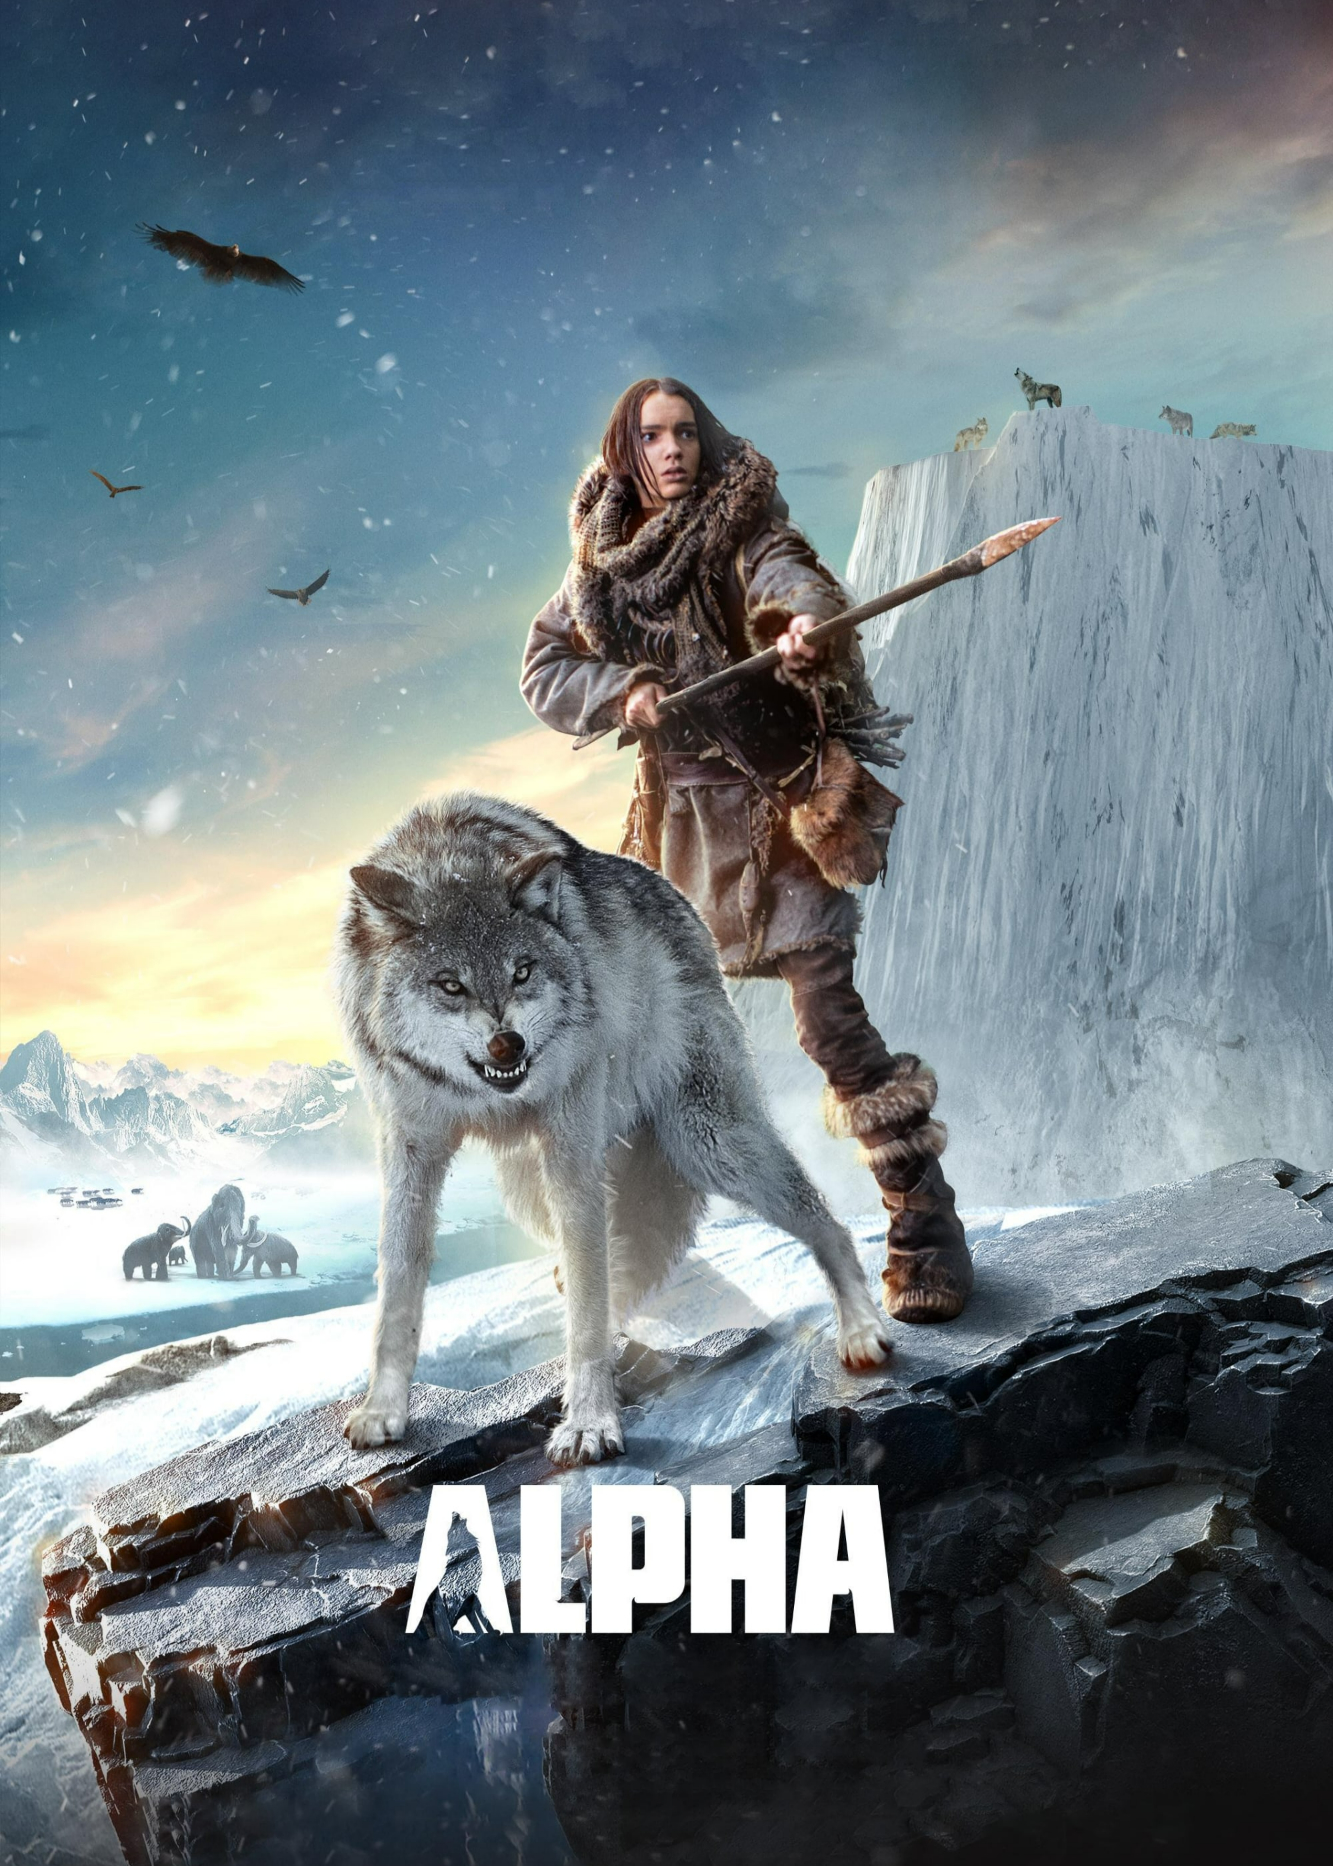 Poster Phim Alpha: Người Thủ Lĩnh (Alpha)